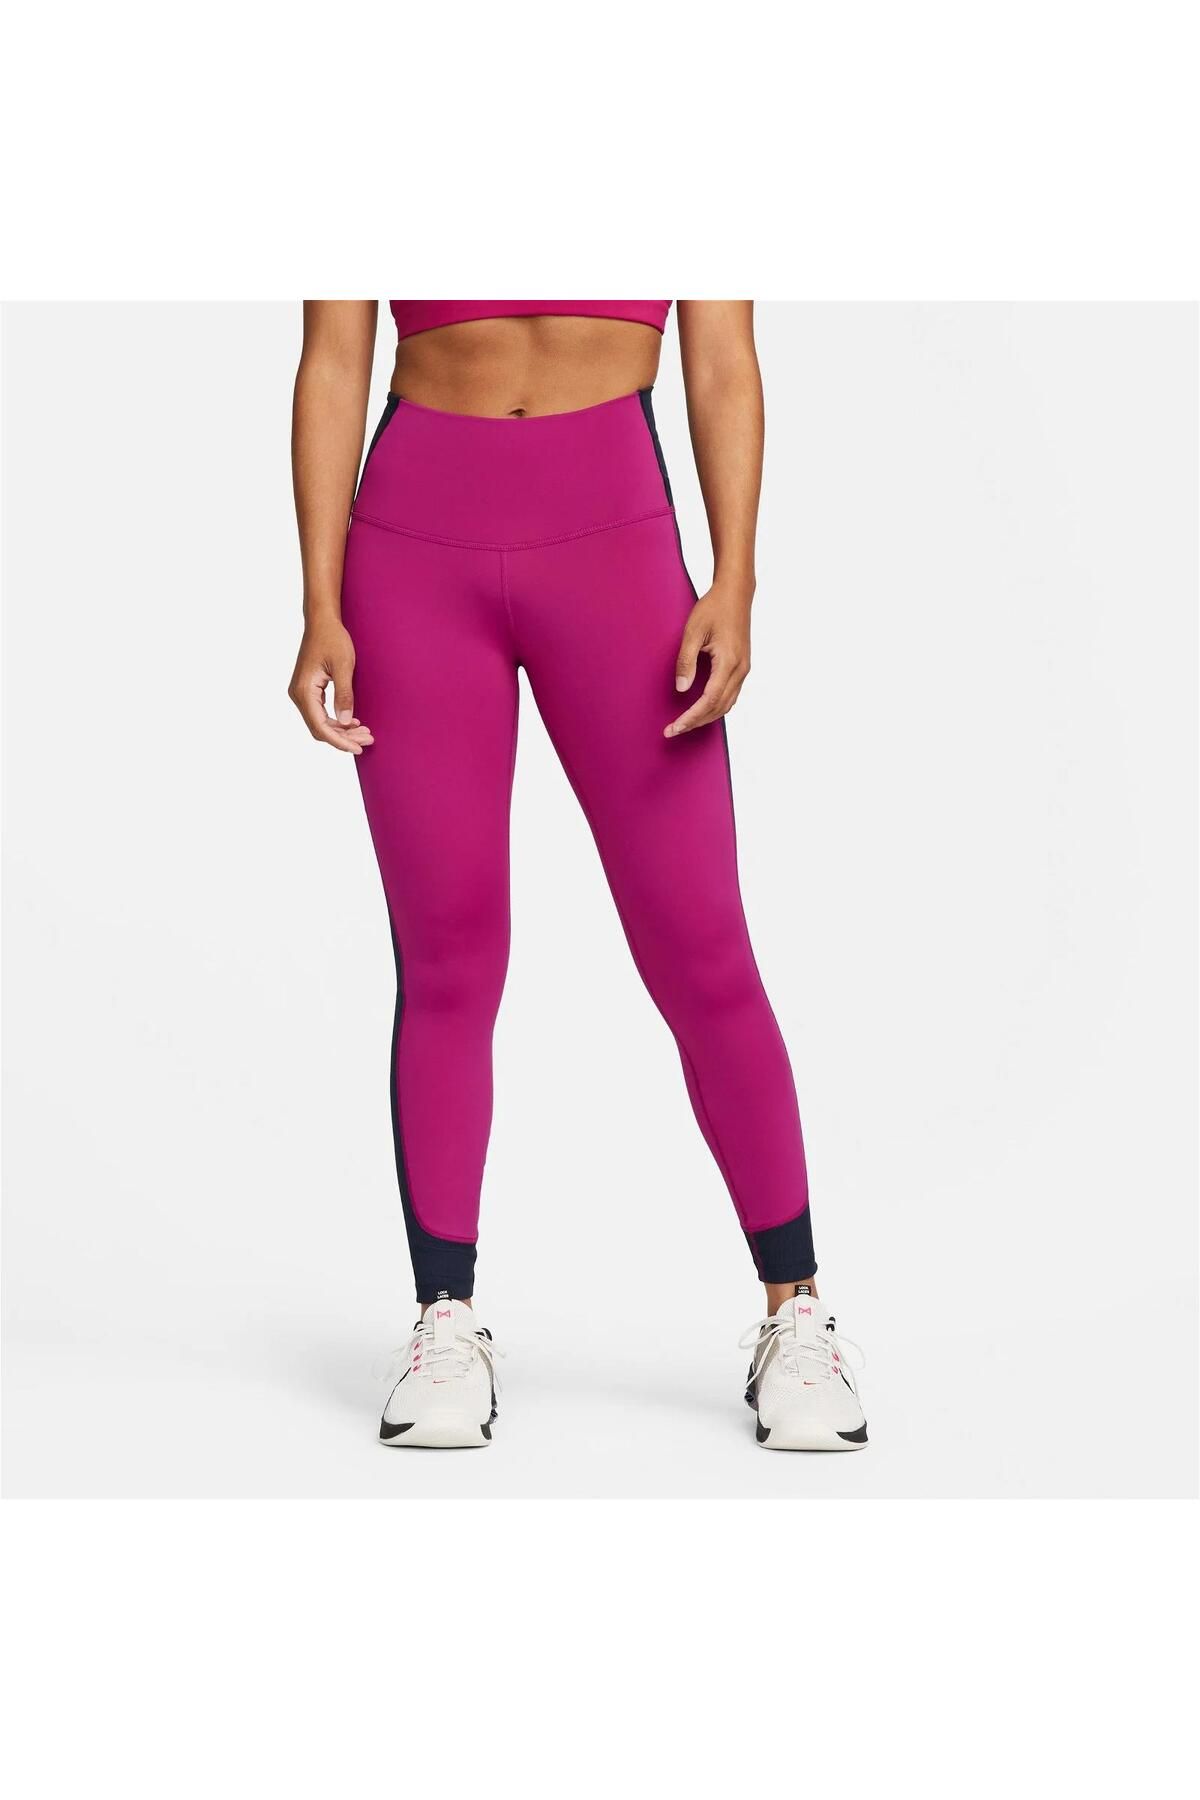 Nike Yoga Dri-fit High Rise 7/8 Nvlty Women's Pink Leggings Dq5622